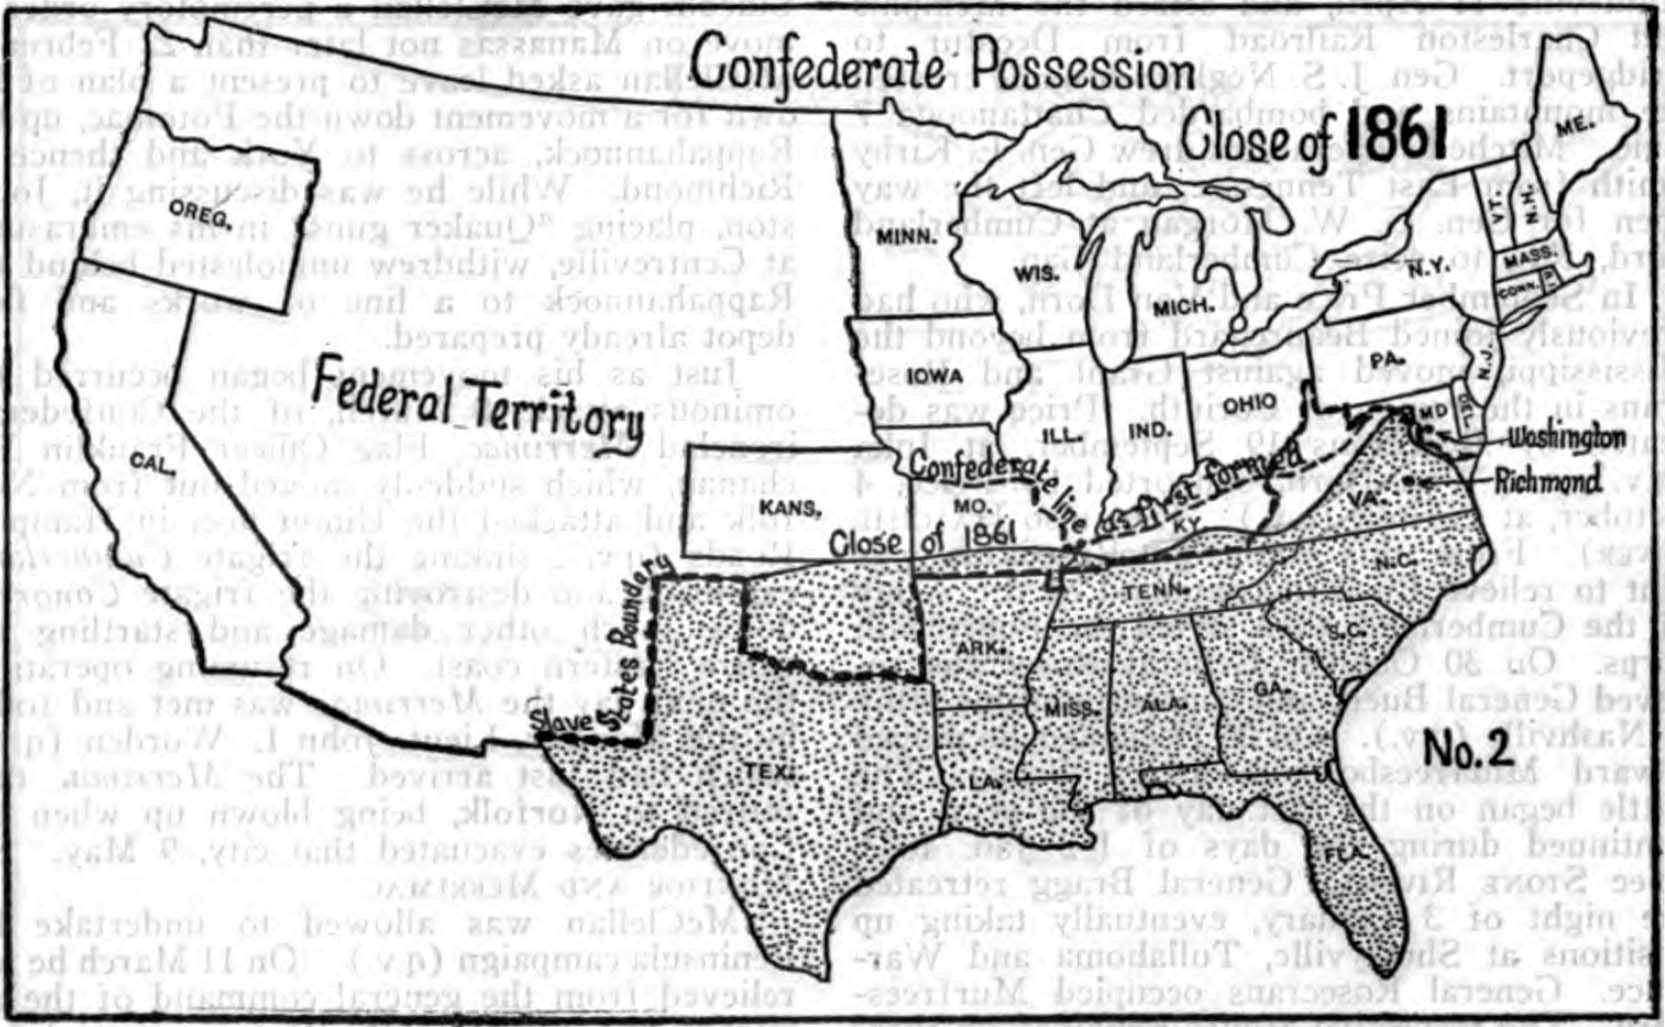 U.S Civil War Possession Map